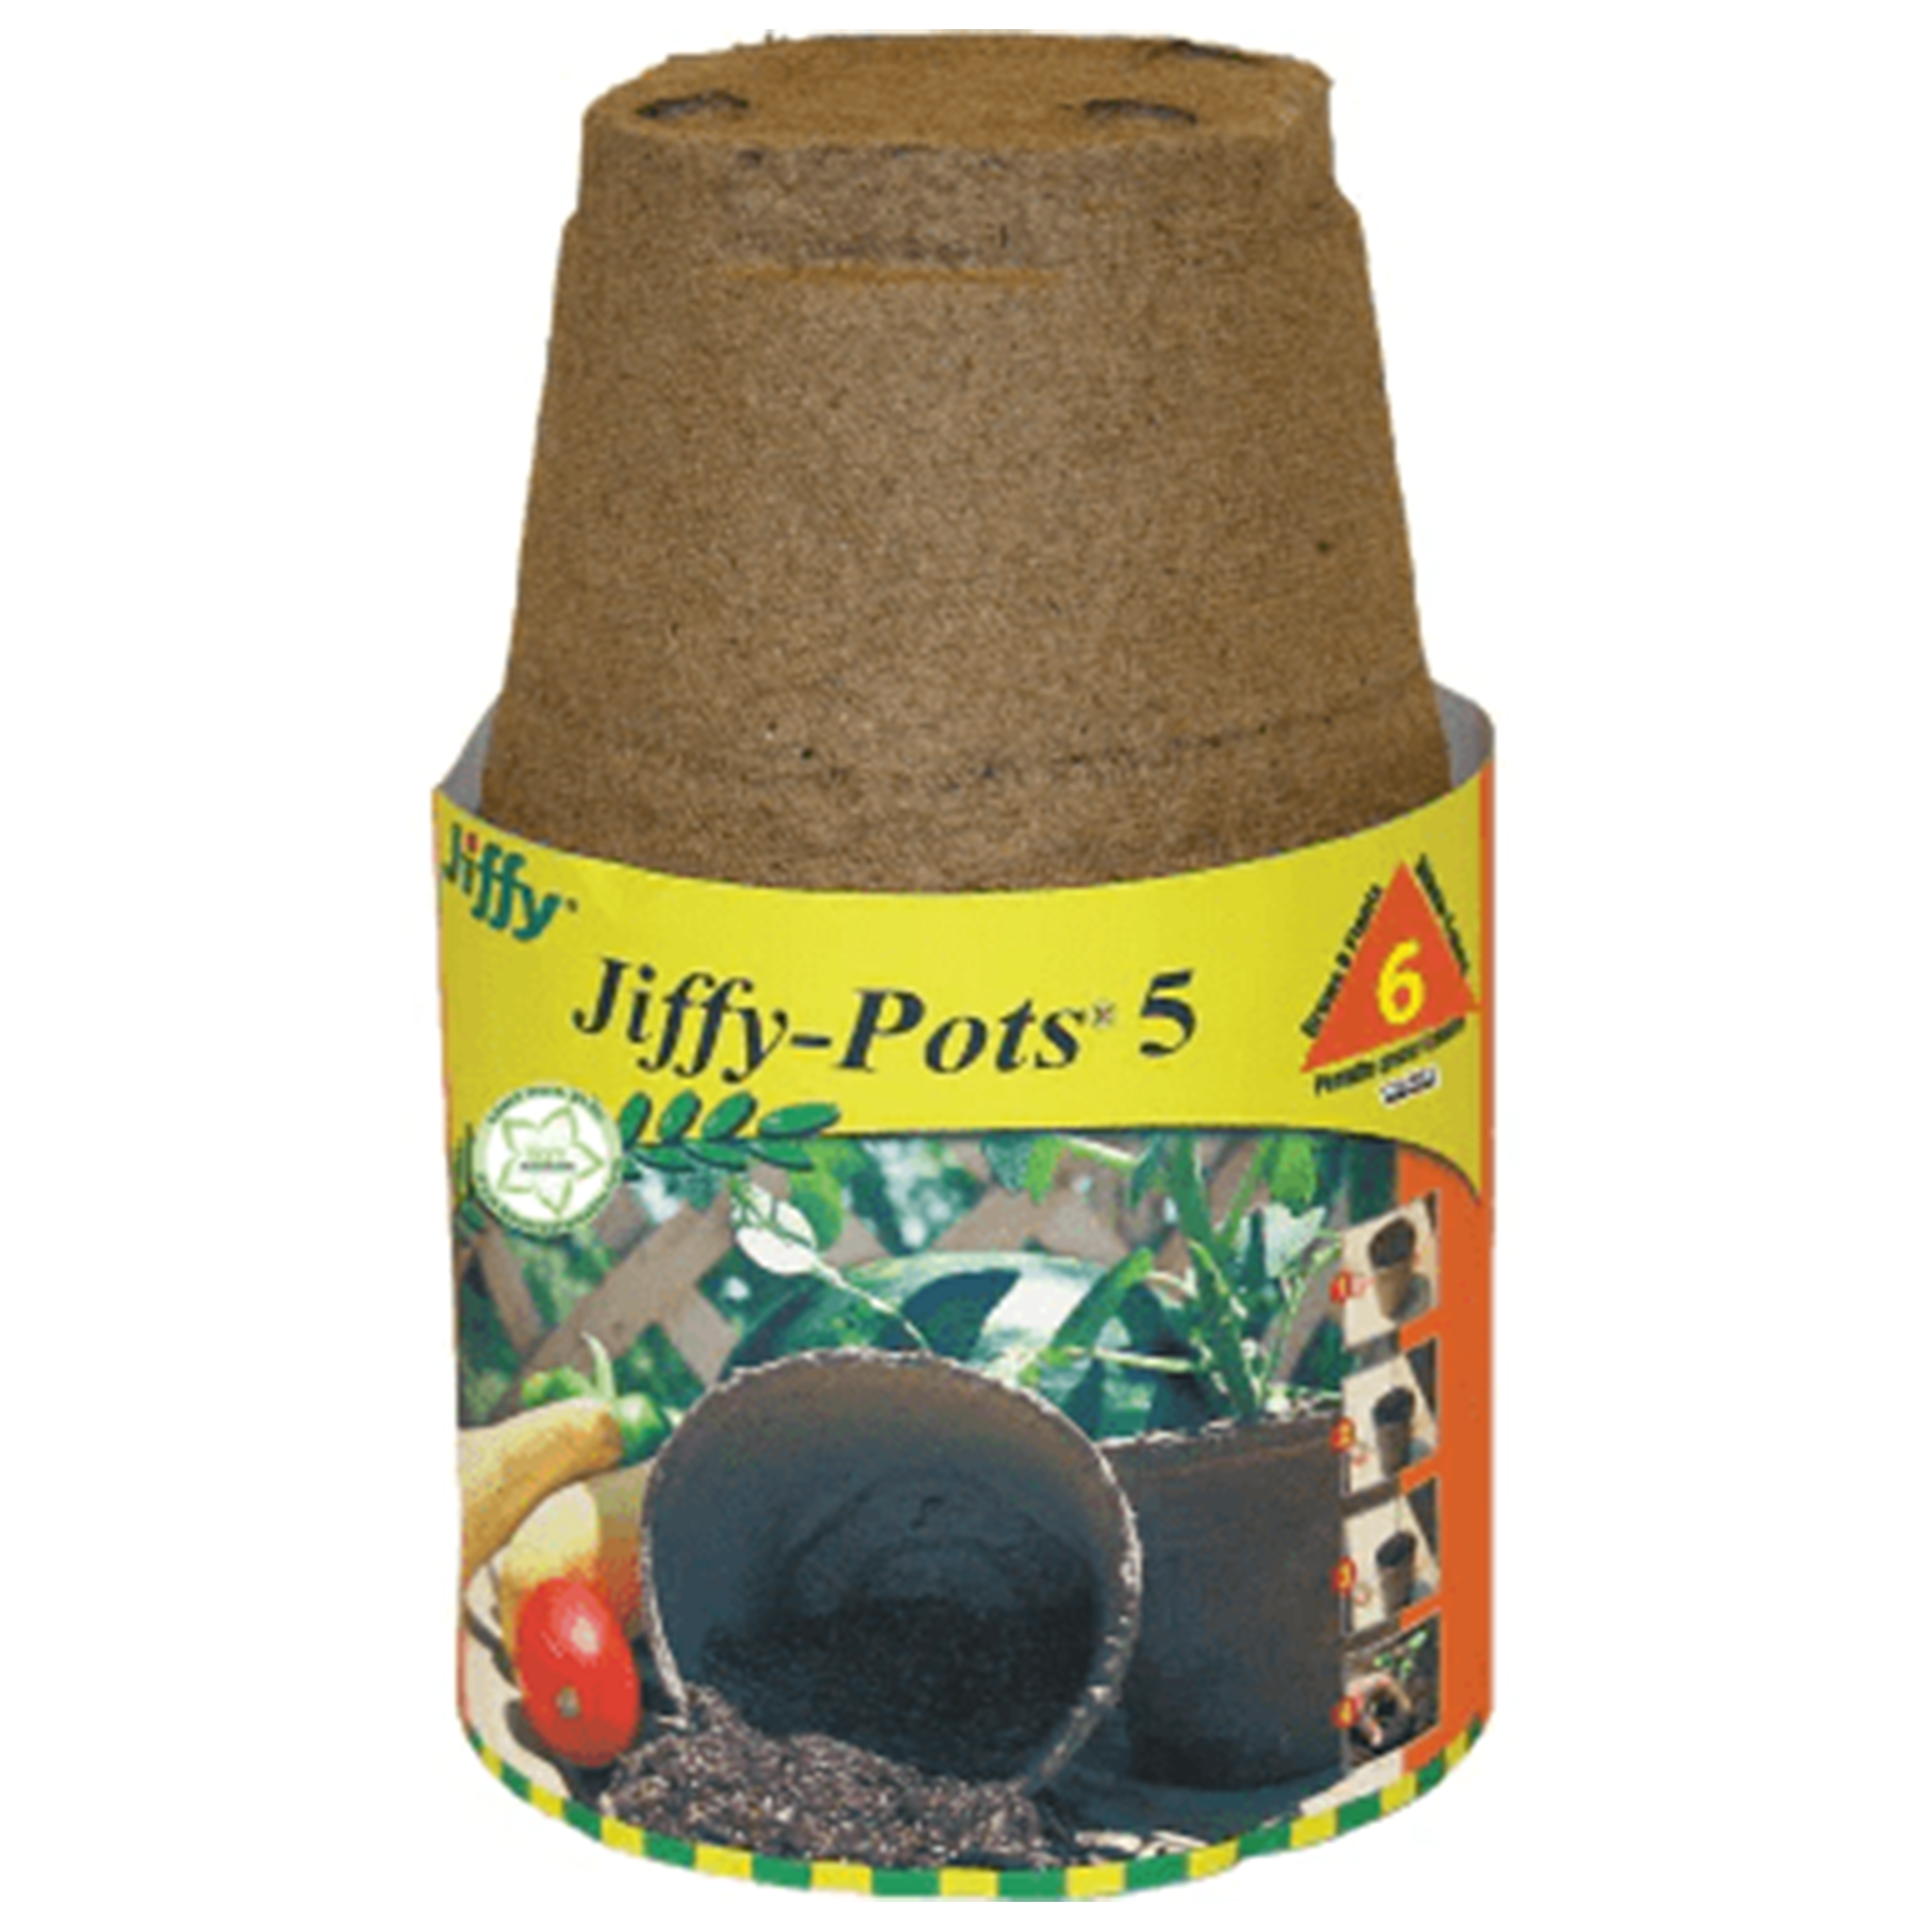 Jiffy Pots 3 Round 10 Pack